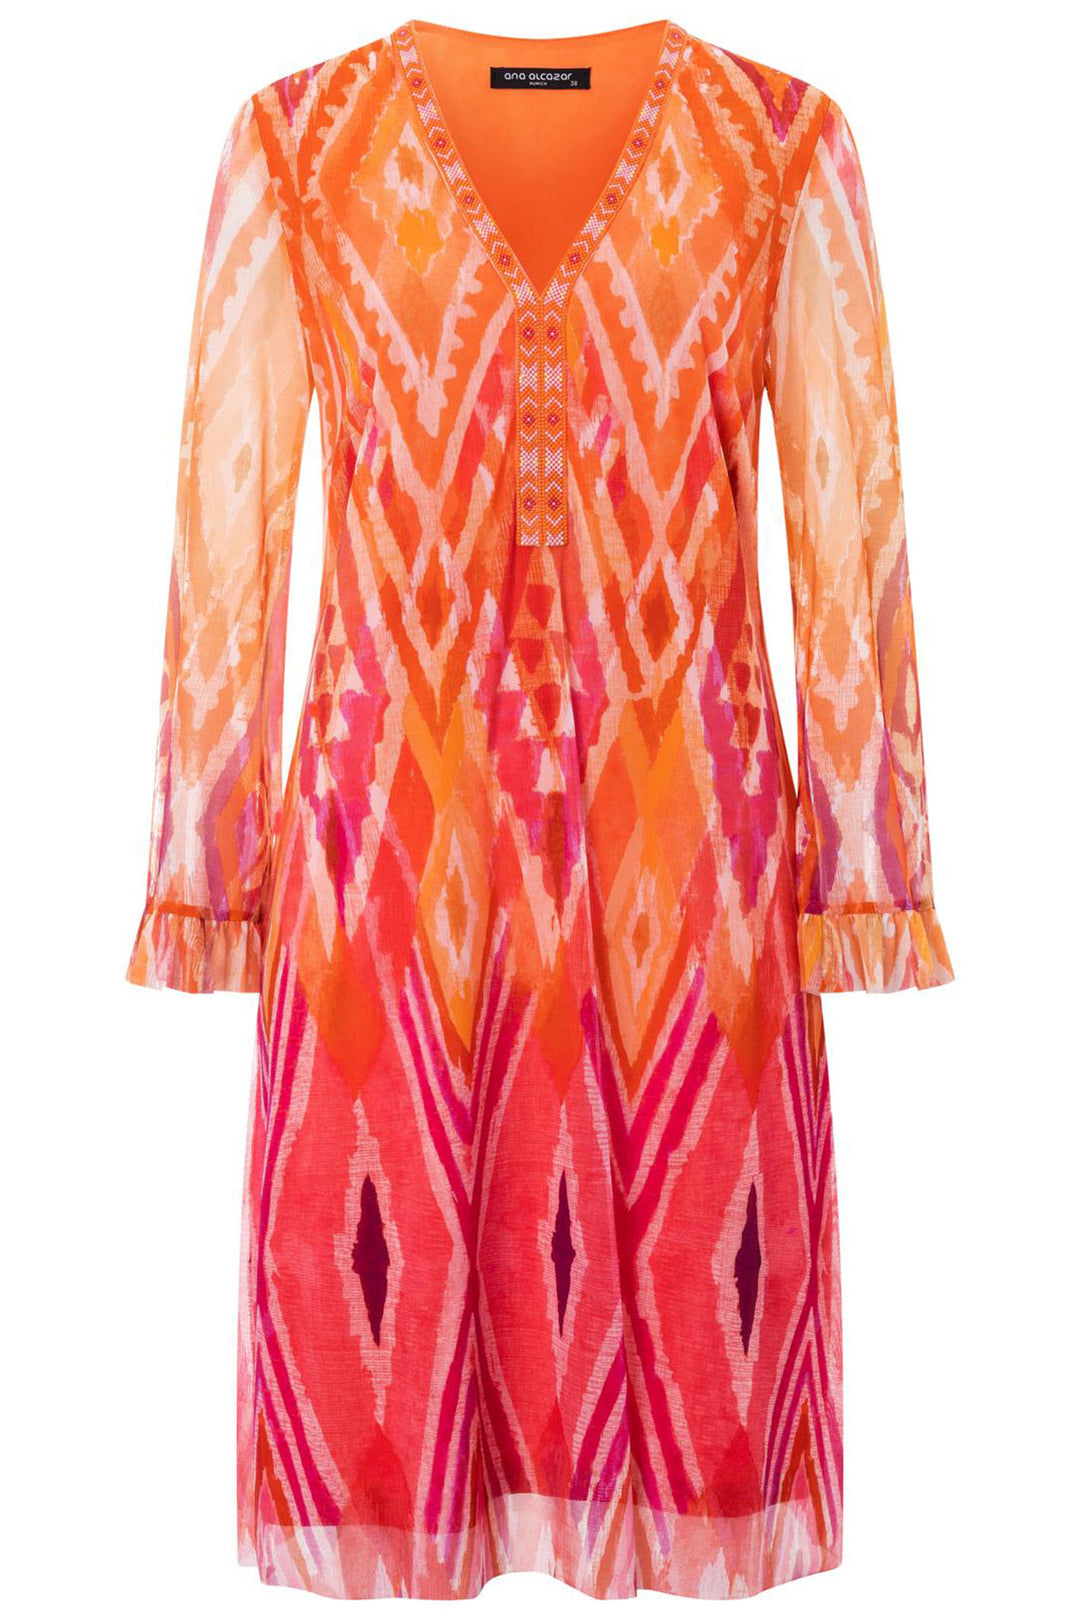 Ana Alcazar 040535 Orange Ikat Print Beaded Neck Short Dress - Olivia Grace Fashion